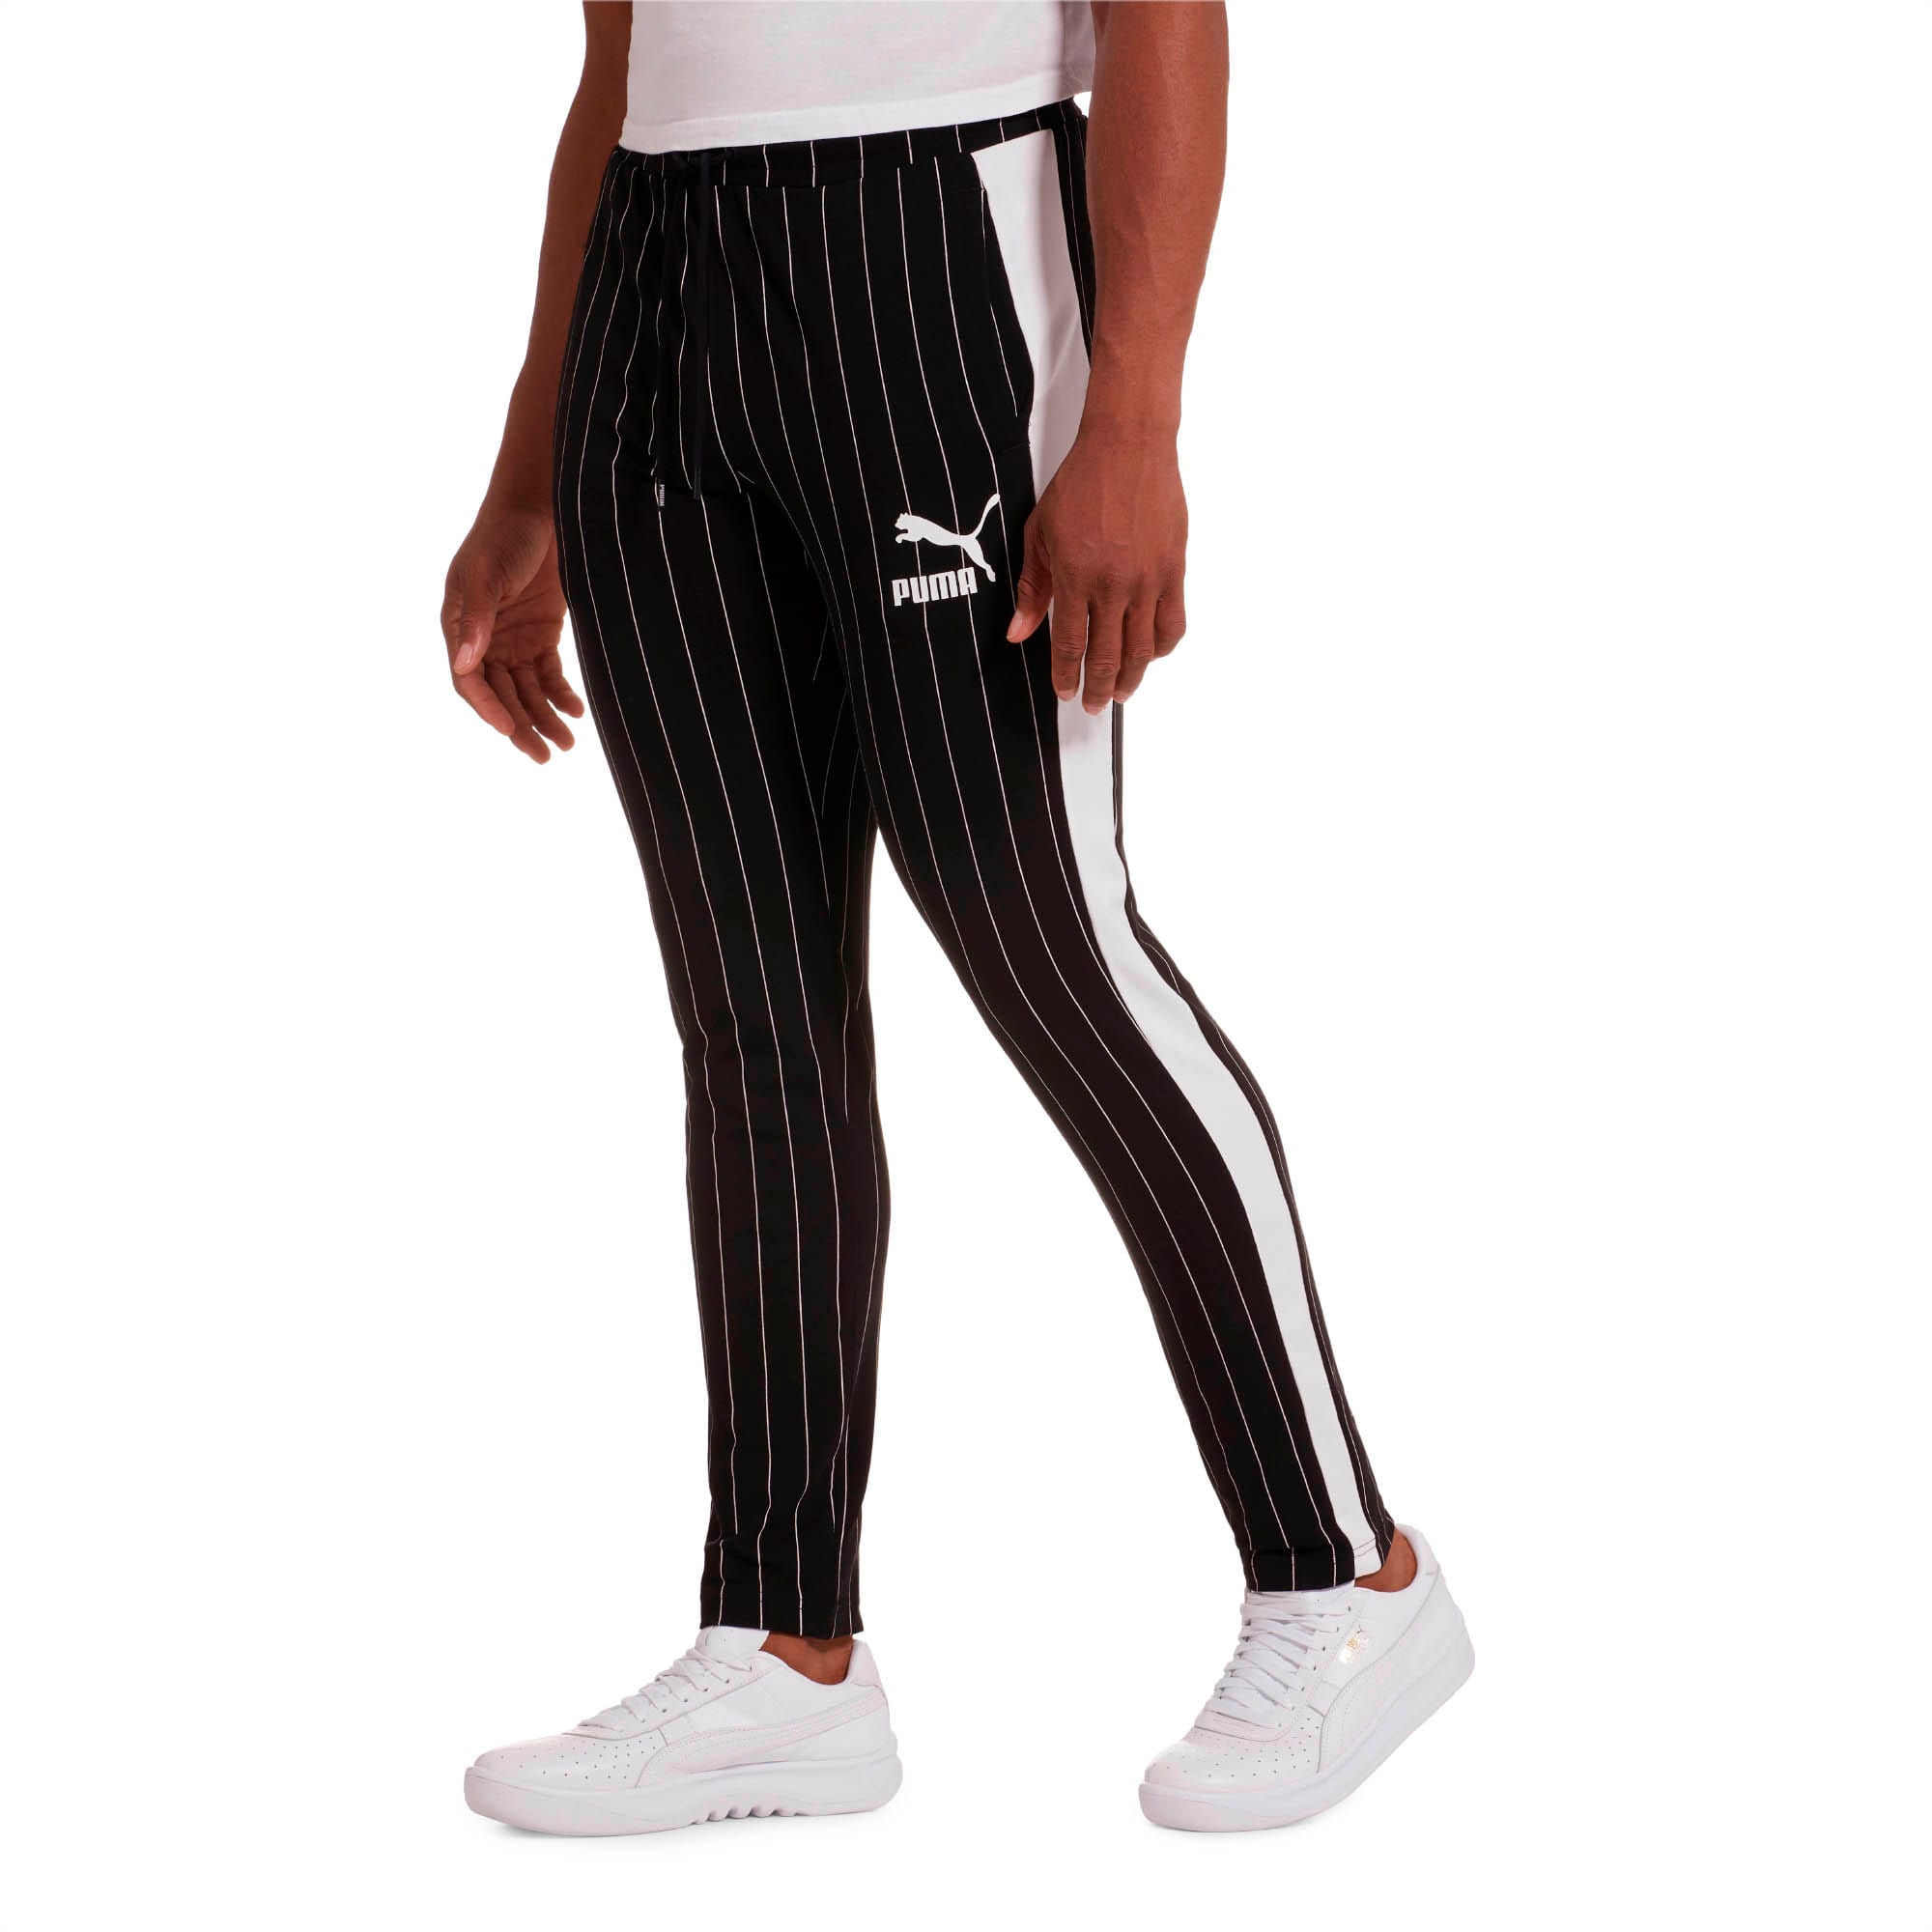 puma white striped pants